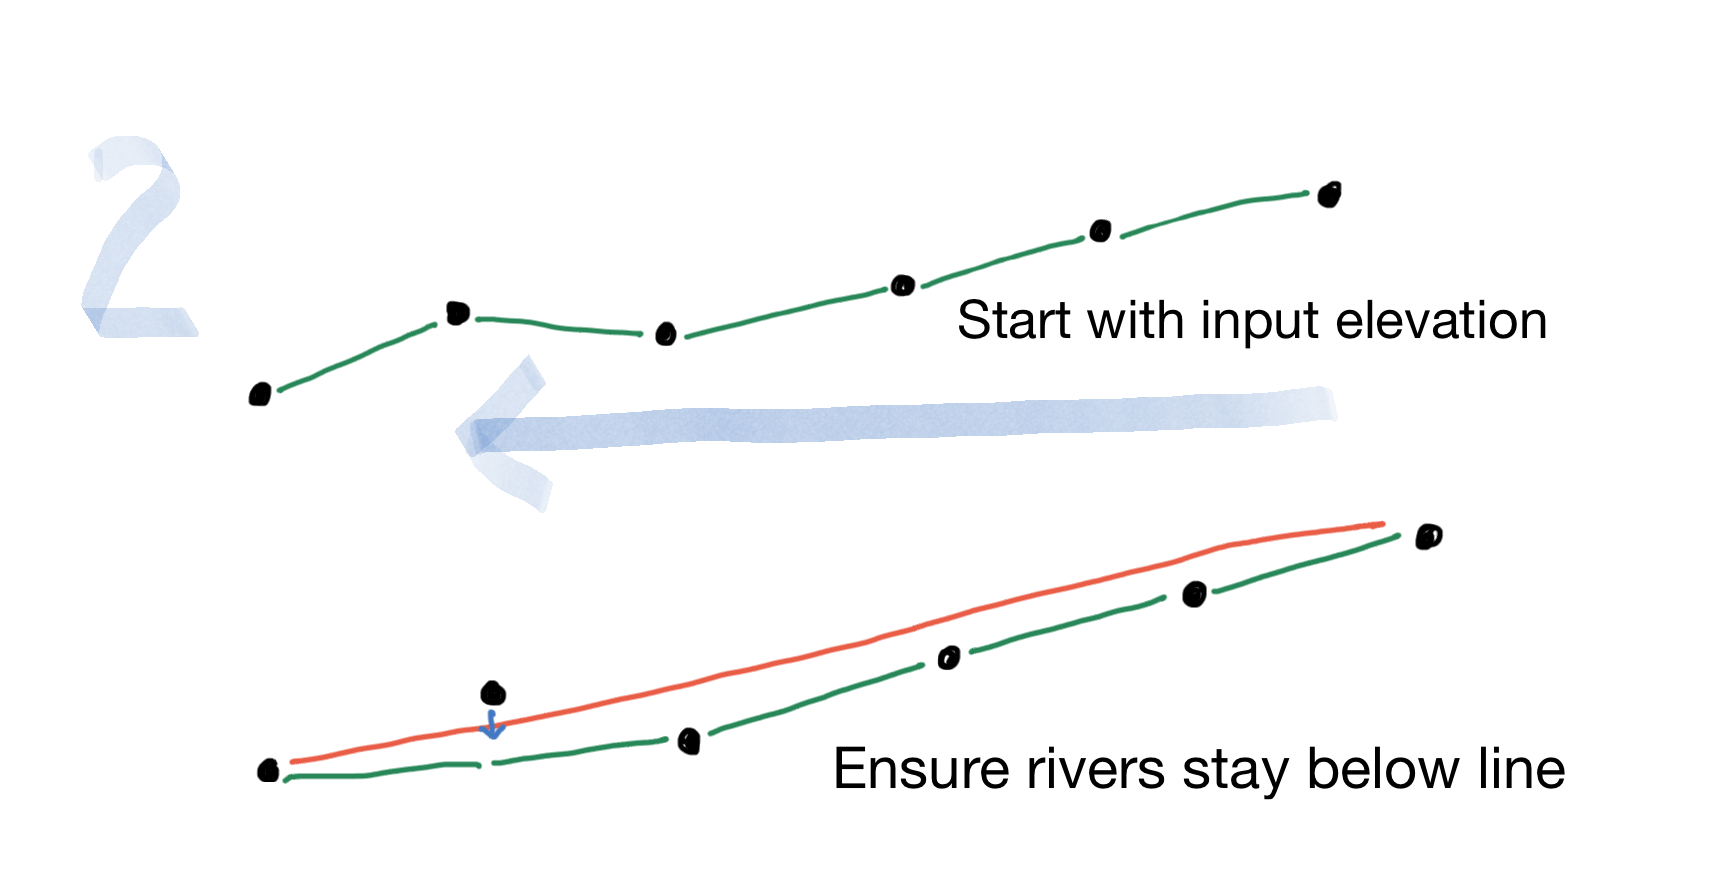 algorithm 2: set elevations down from ridges